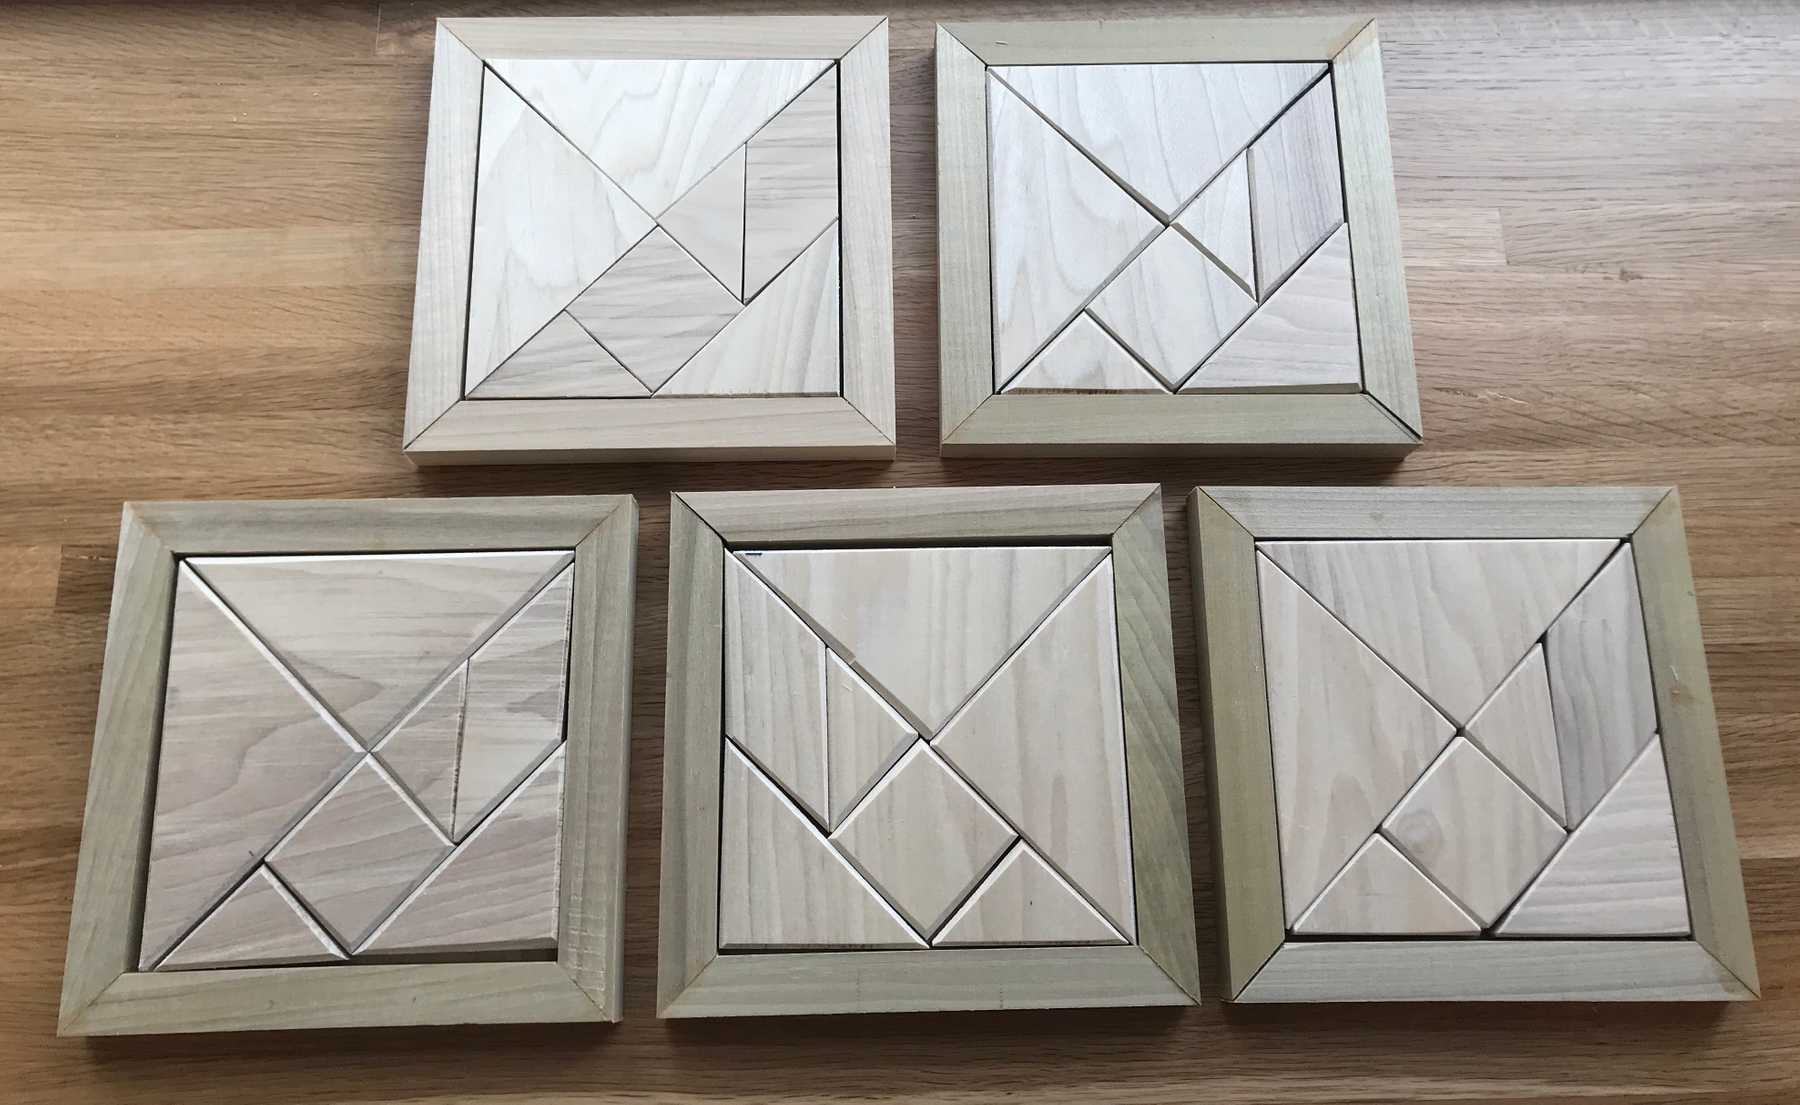 5 sets of tangrams